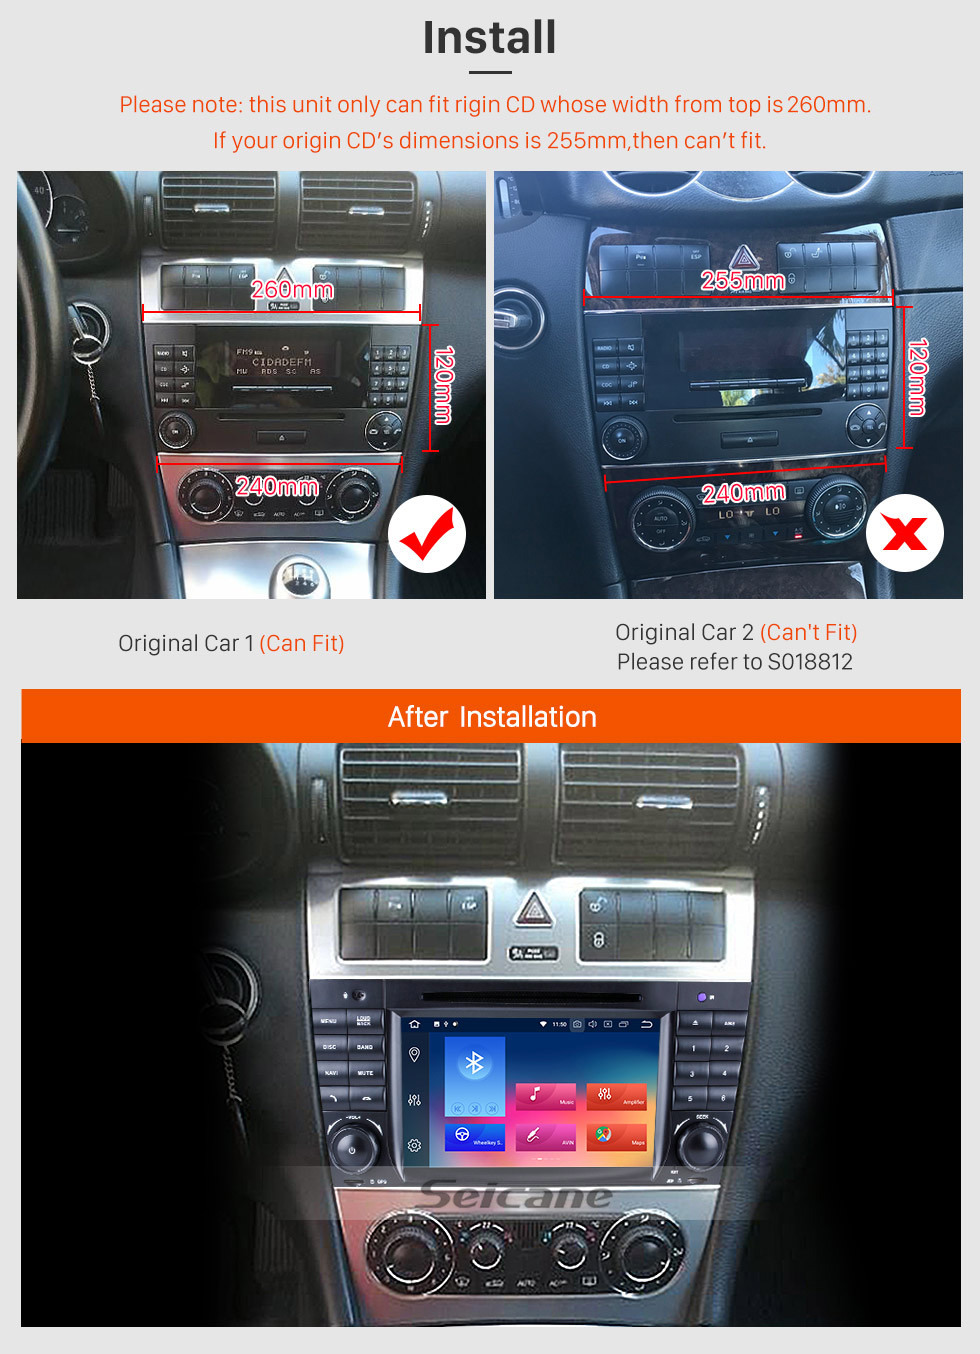 Seicane Pure Android 9.0 Autoradio DVD GPS Head Unit for 2004-2011 Mercedes Benz CLK Class W209 CLK270 CLK320 CLK350 CLK500 CLK550 with Radio RDS Bluetooth 3G WiFi Mirror Link OBD2